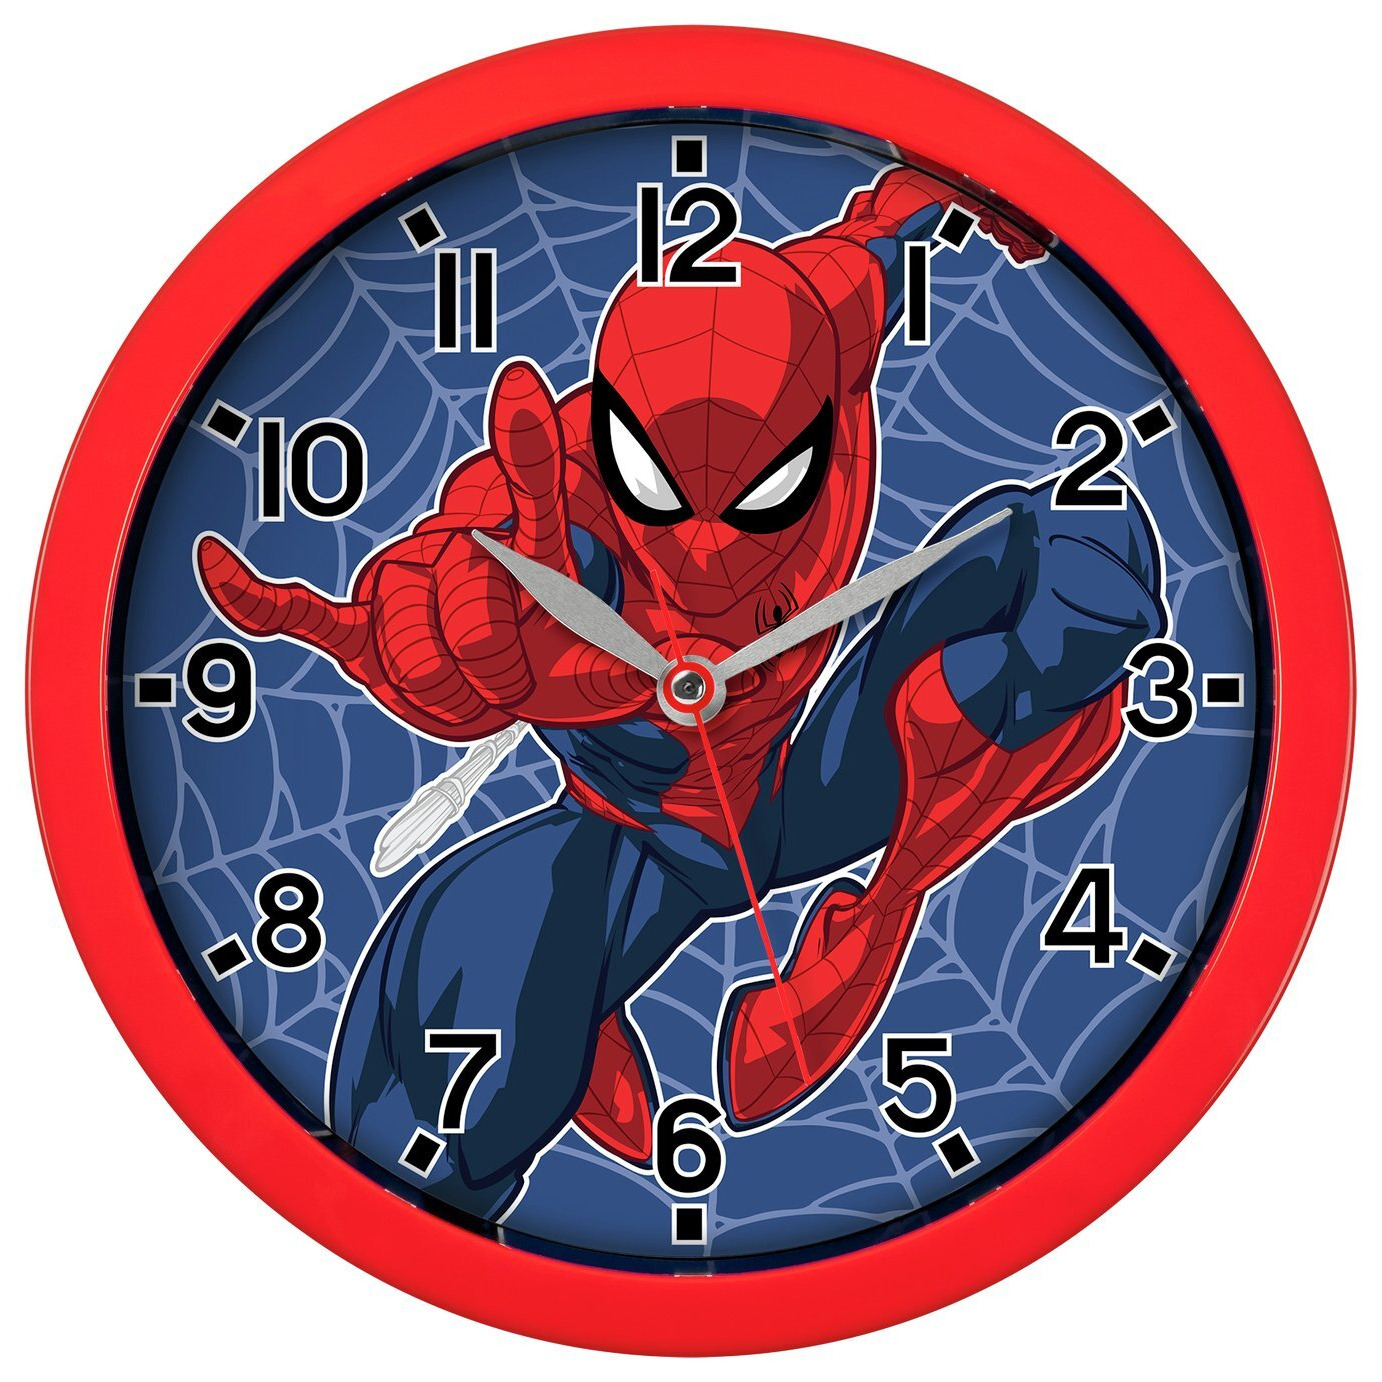 Disney Marvel Spider-Man Kids Wall Clock - Red - image 1